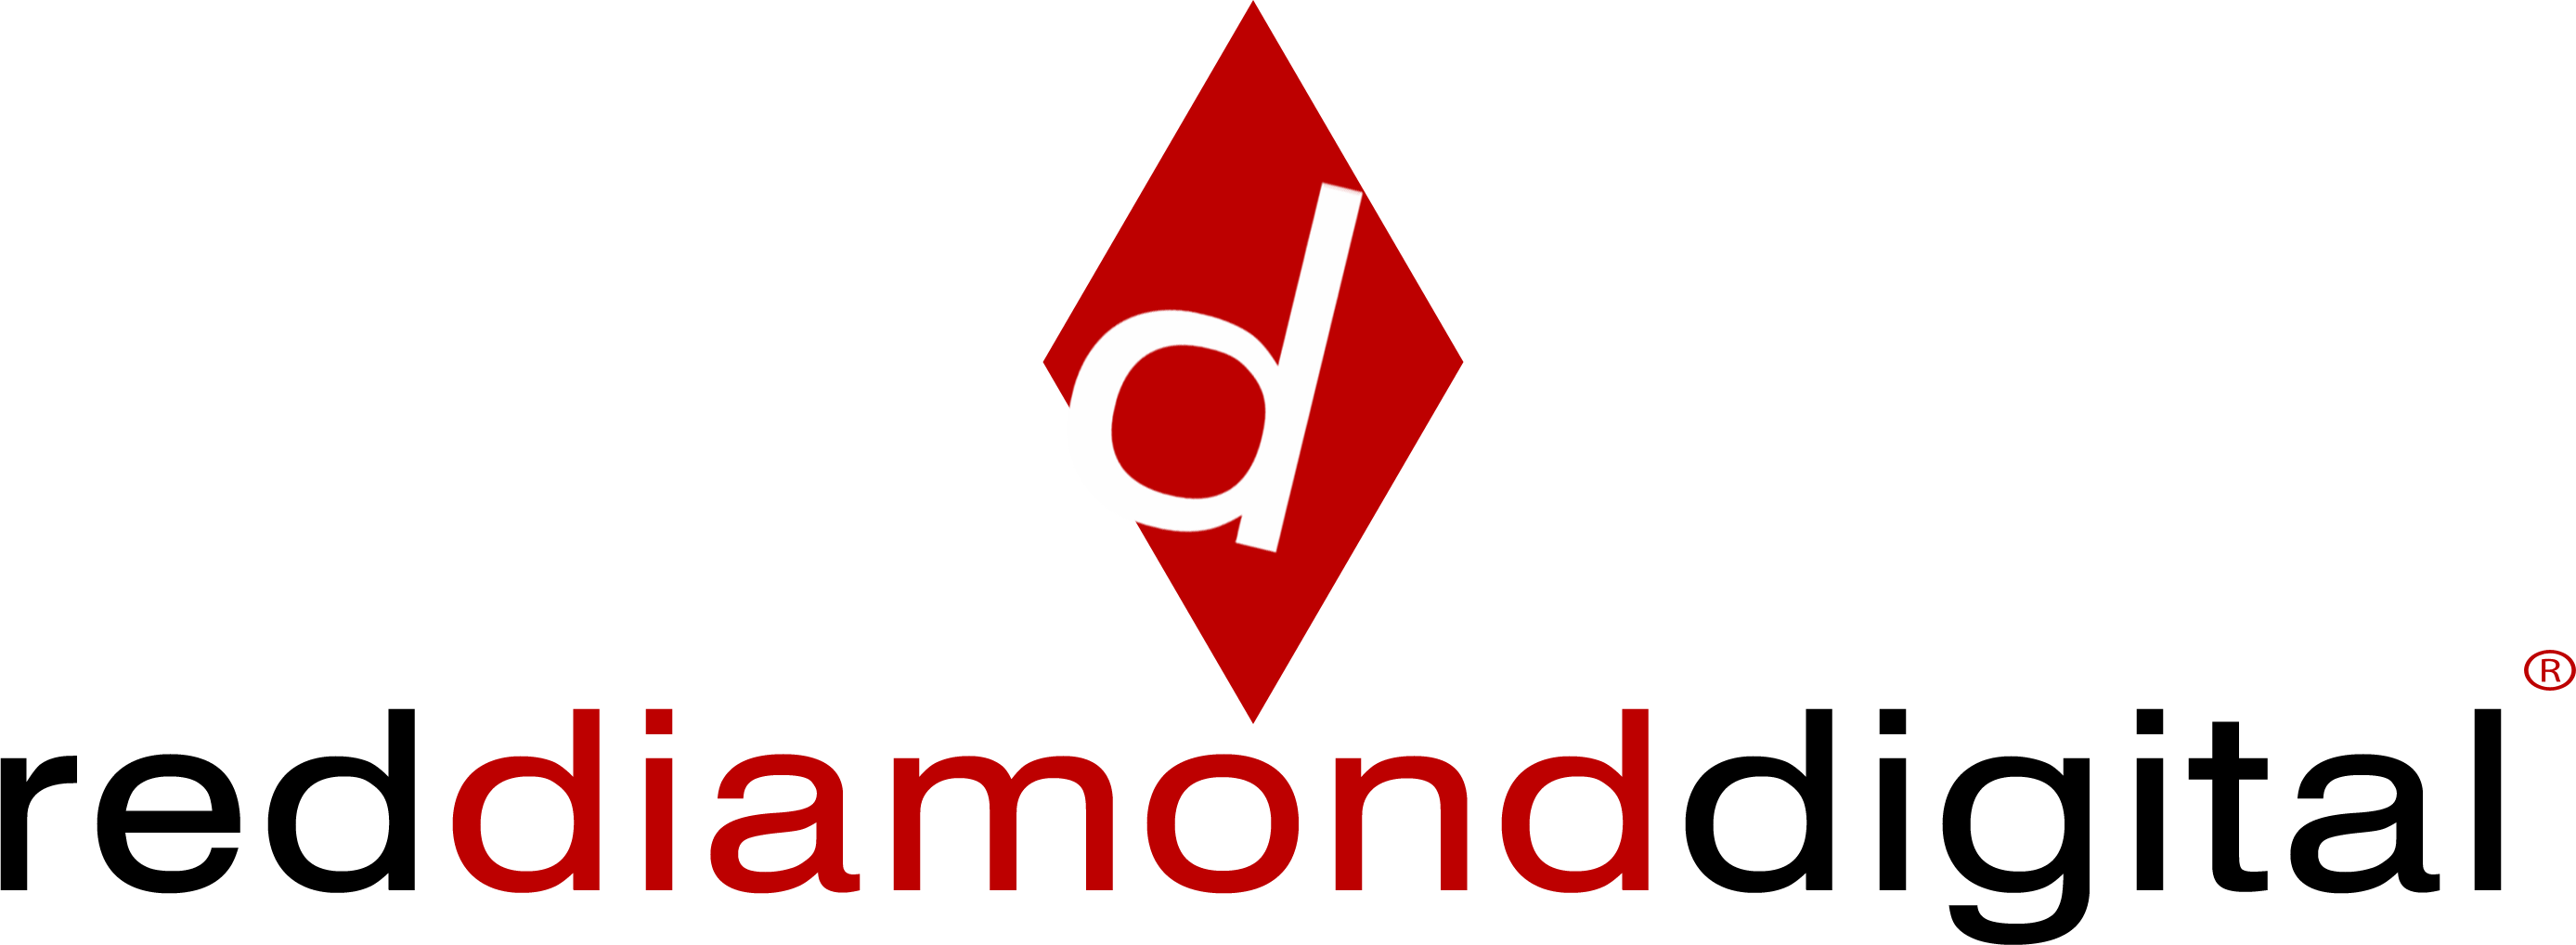 Red White Diamond Logo - Red Diamond Digital - Web Design, Graphic Design, Printing ...